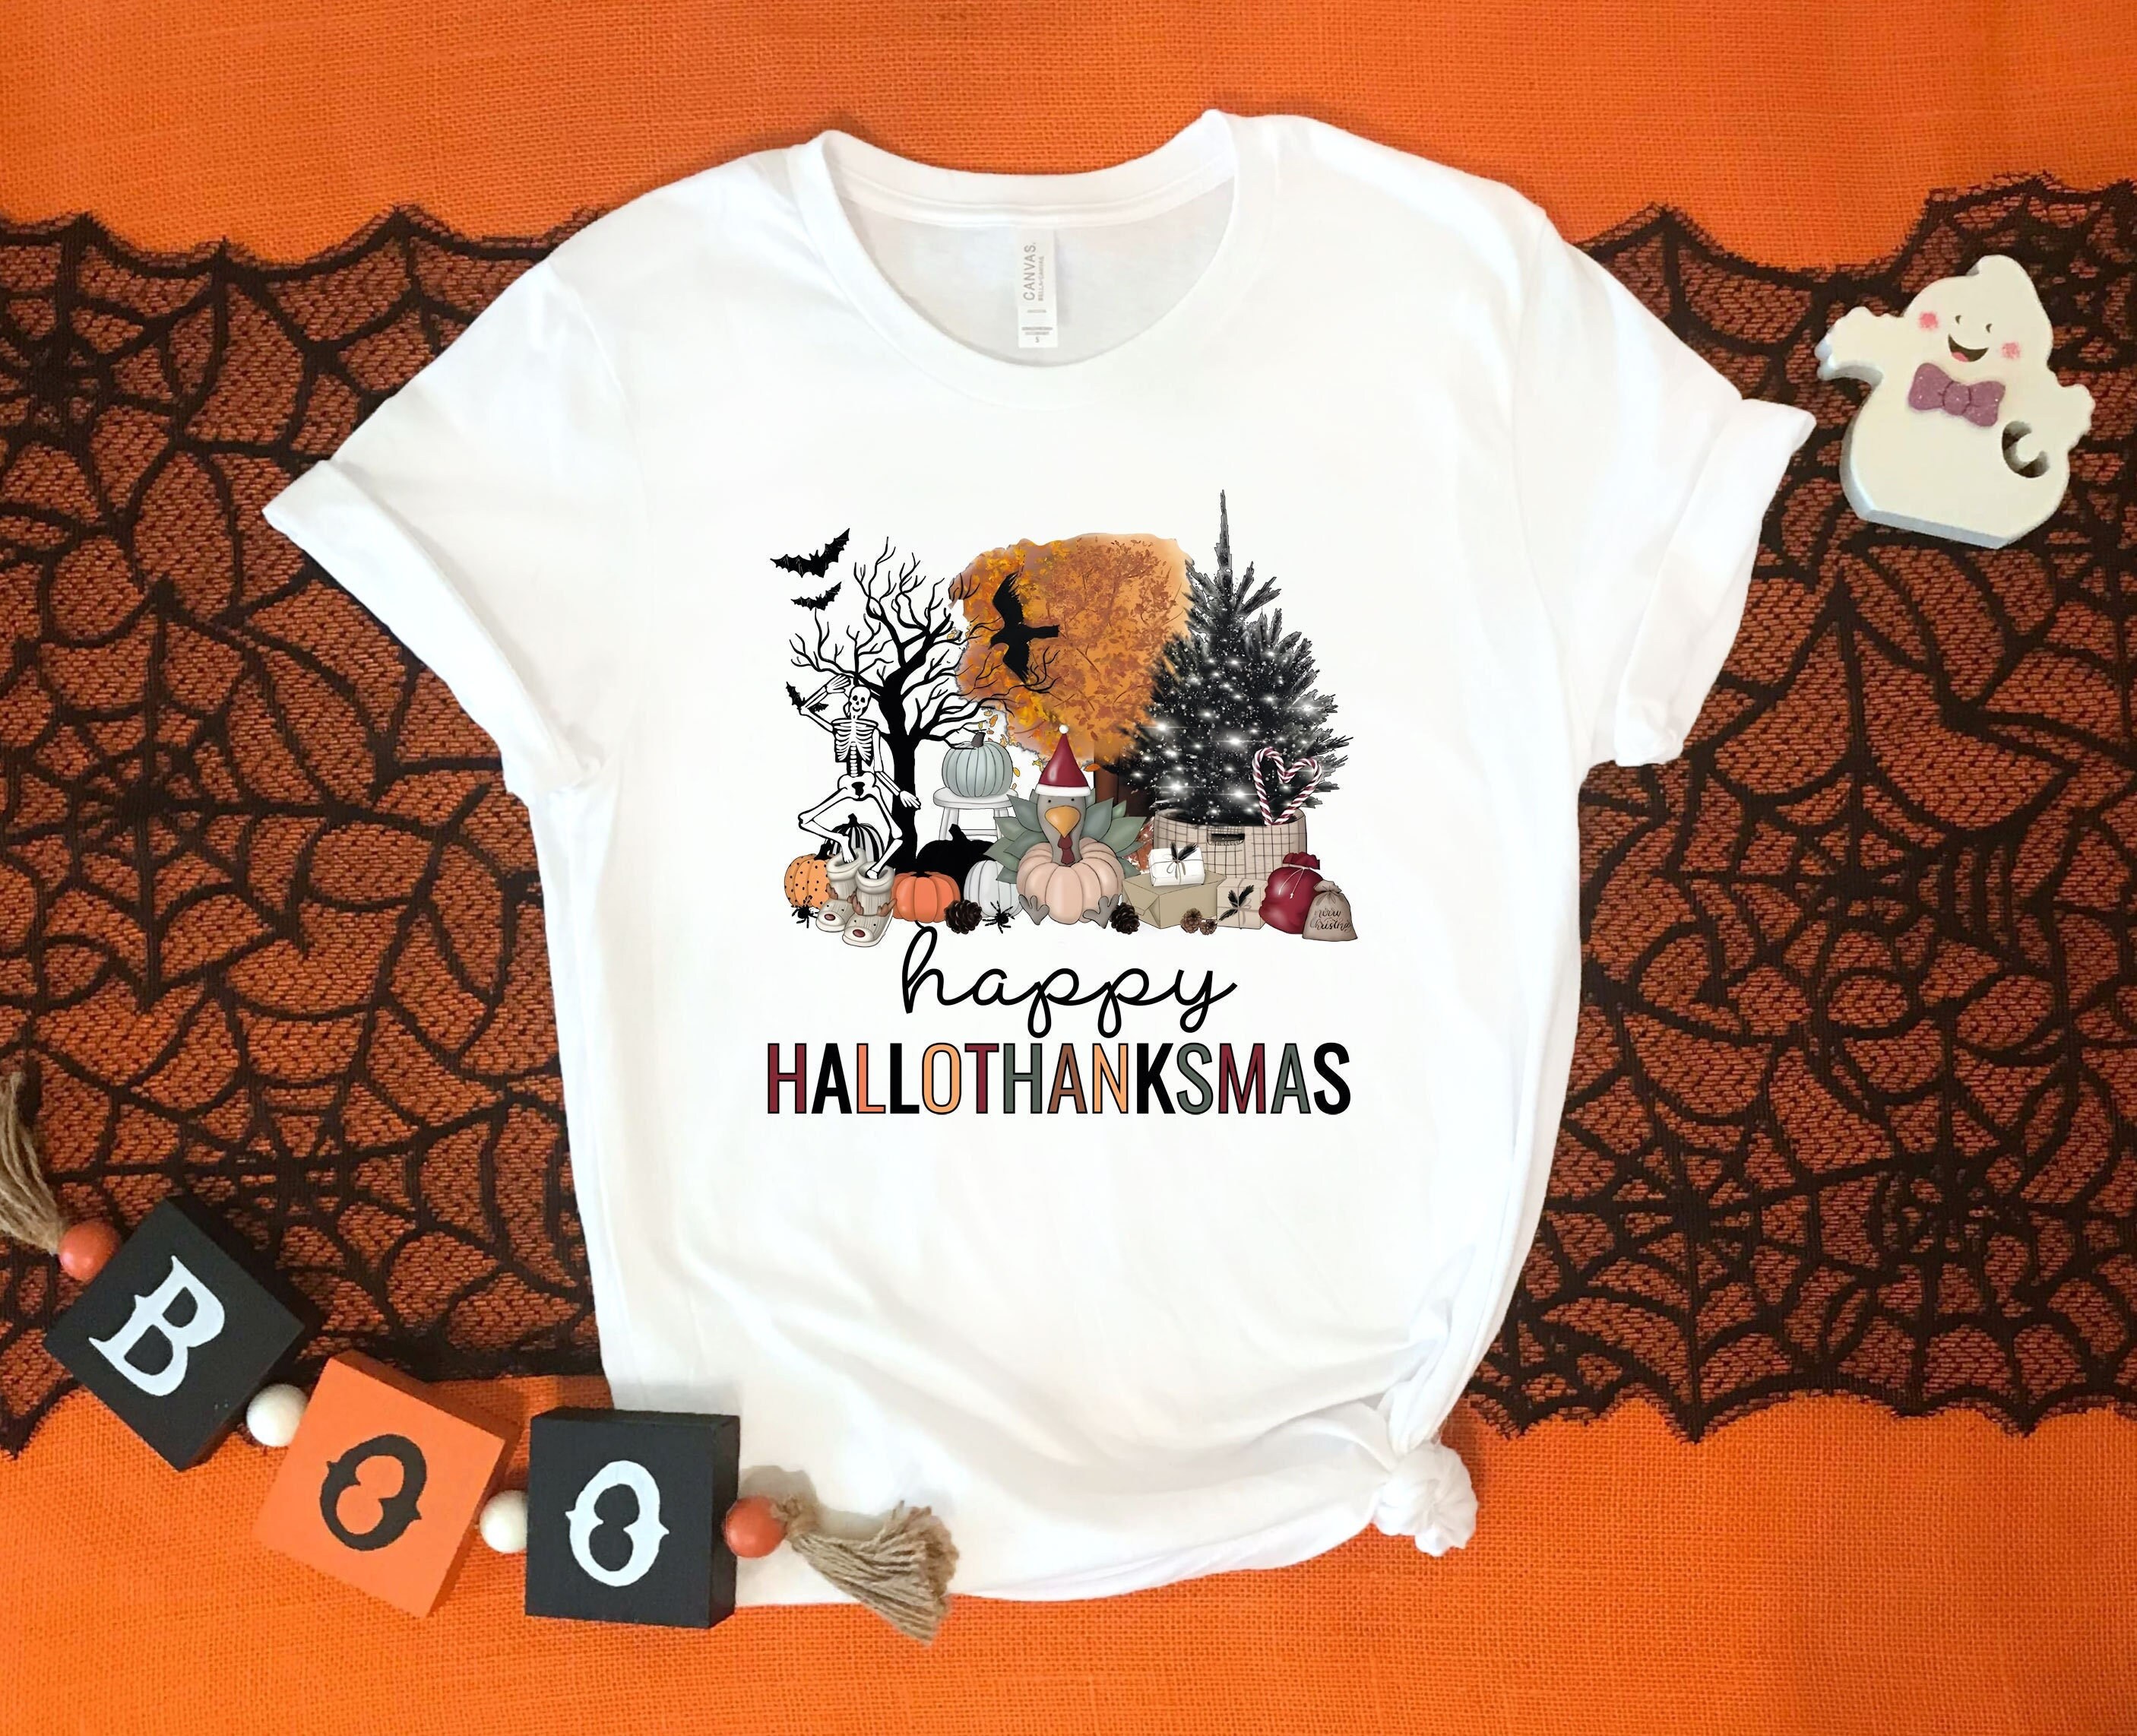 Discover Happy Hallothanksmas Shirt, Thanksgiving Shirt, Holiday Shirt, Family Shirt, Fall Tee, Halloween T-Shirt, Funny Shirt, Christmas Shirt